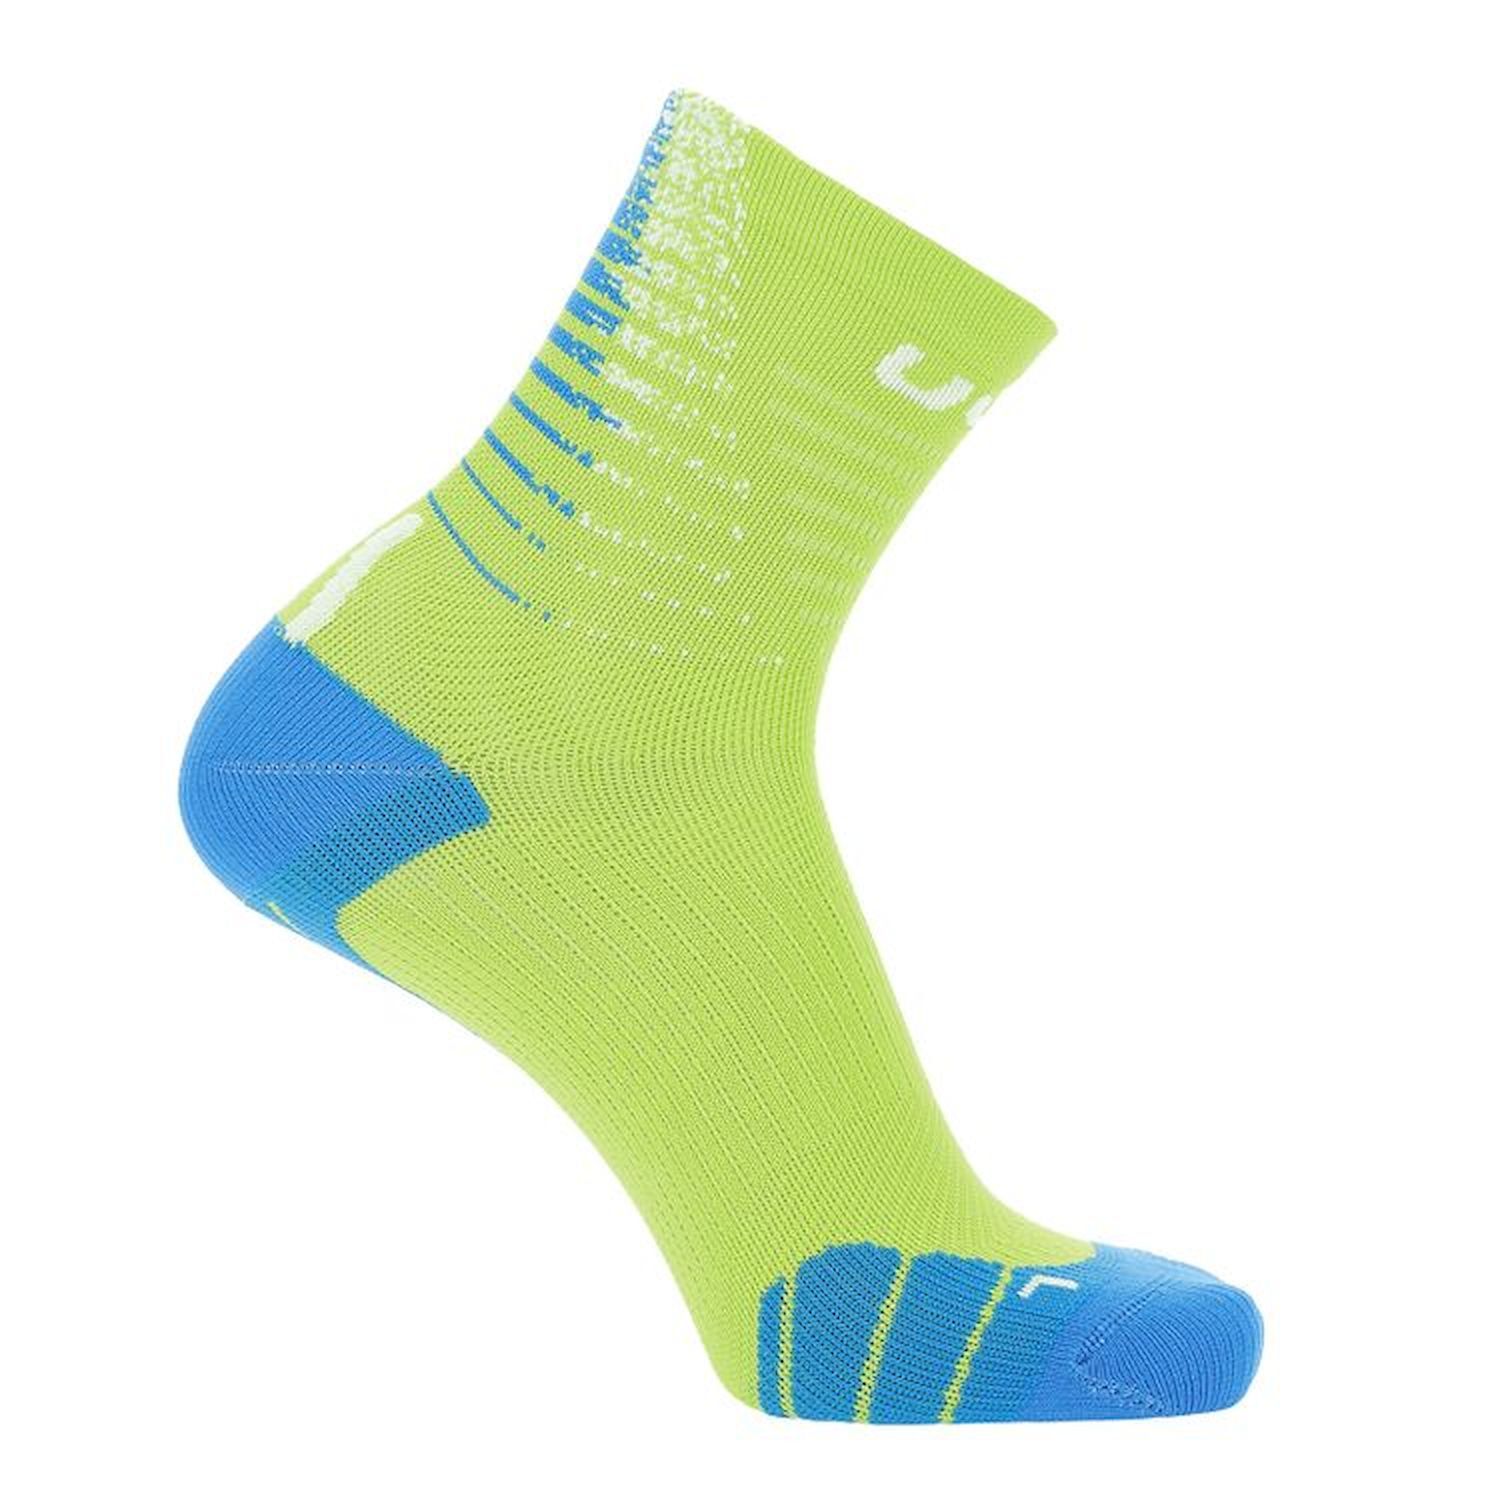 Uyn Run Fit - Running socks - Men's